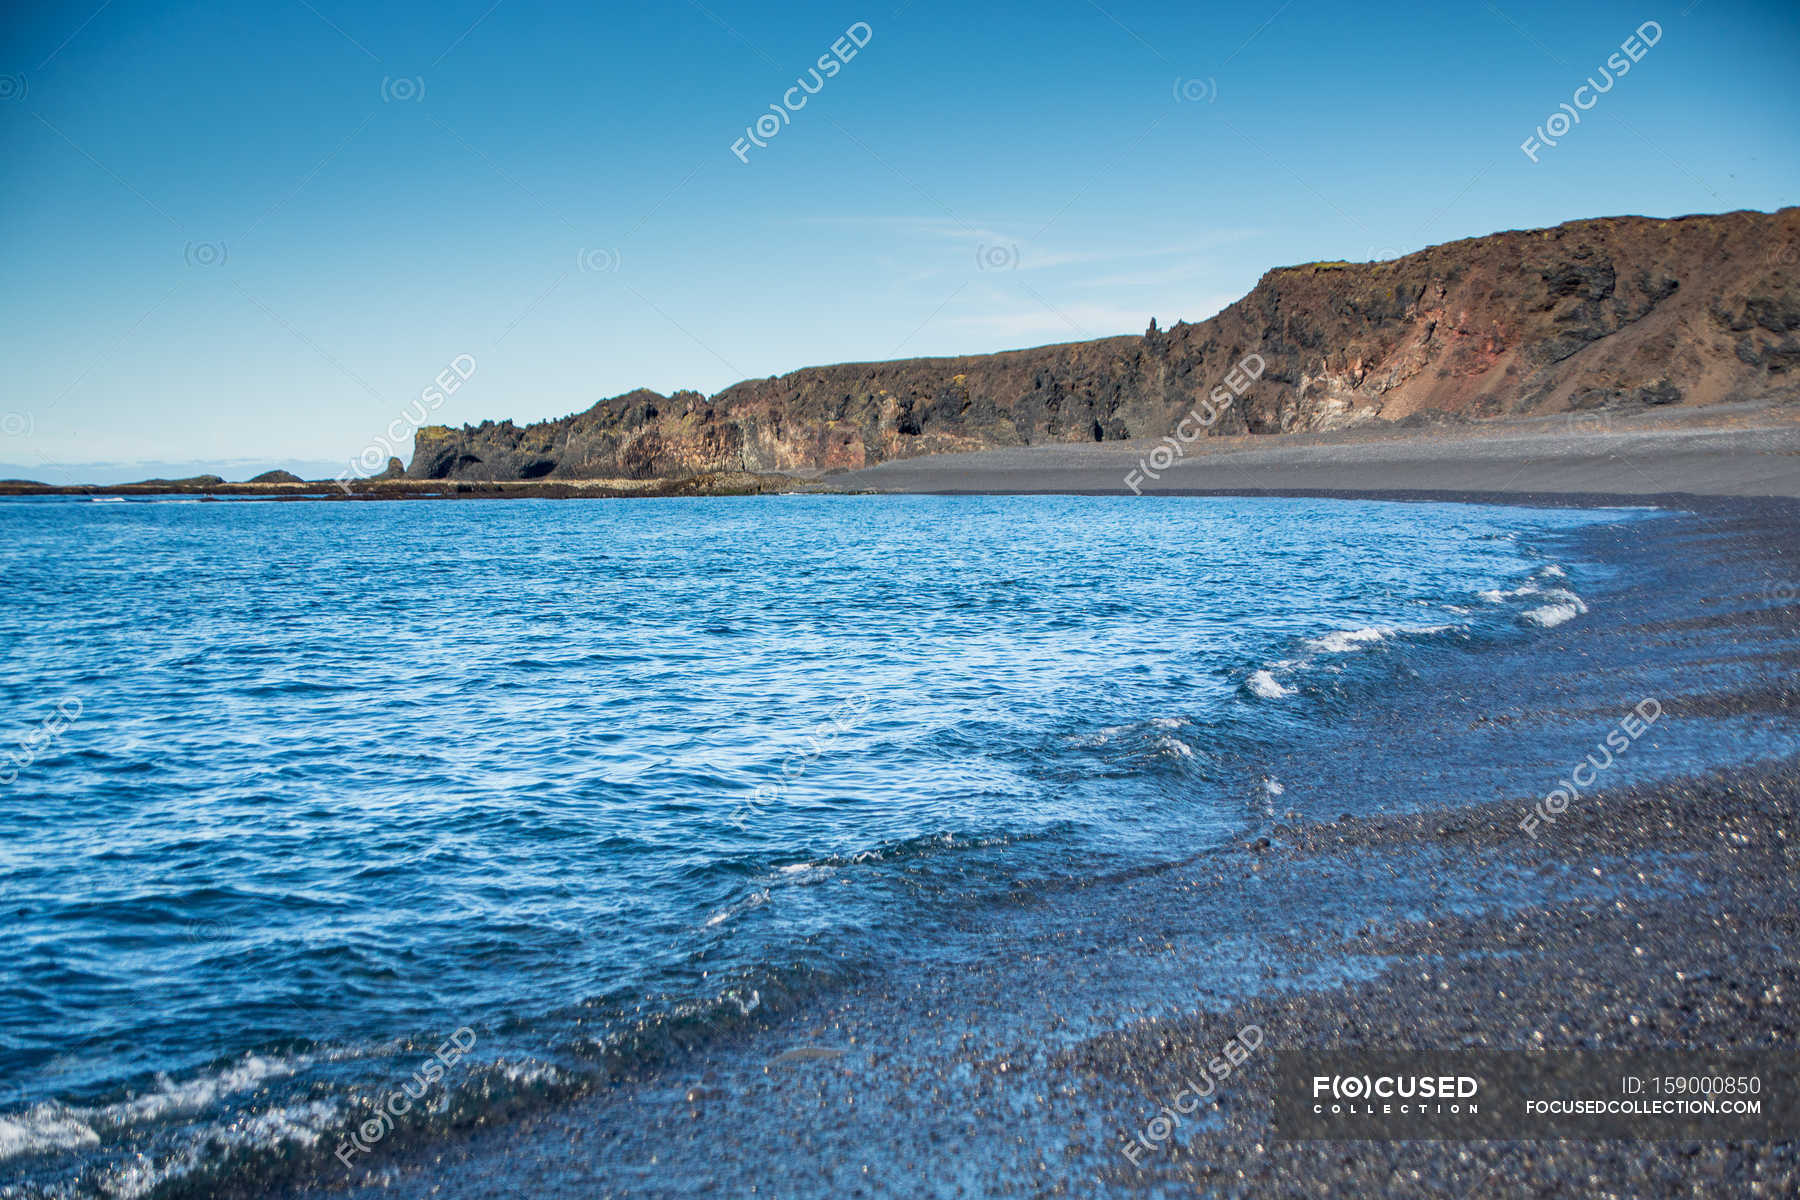 Seascape with Icelandic coast — Stock Photo | #159000850